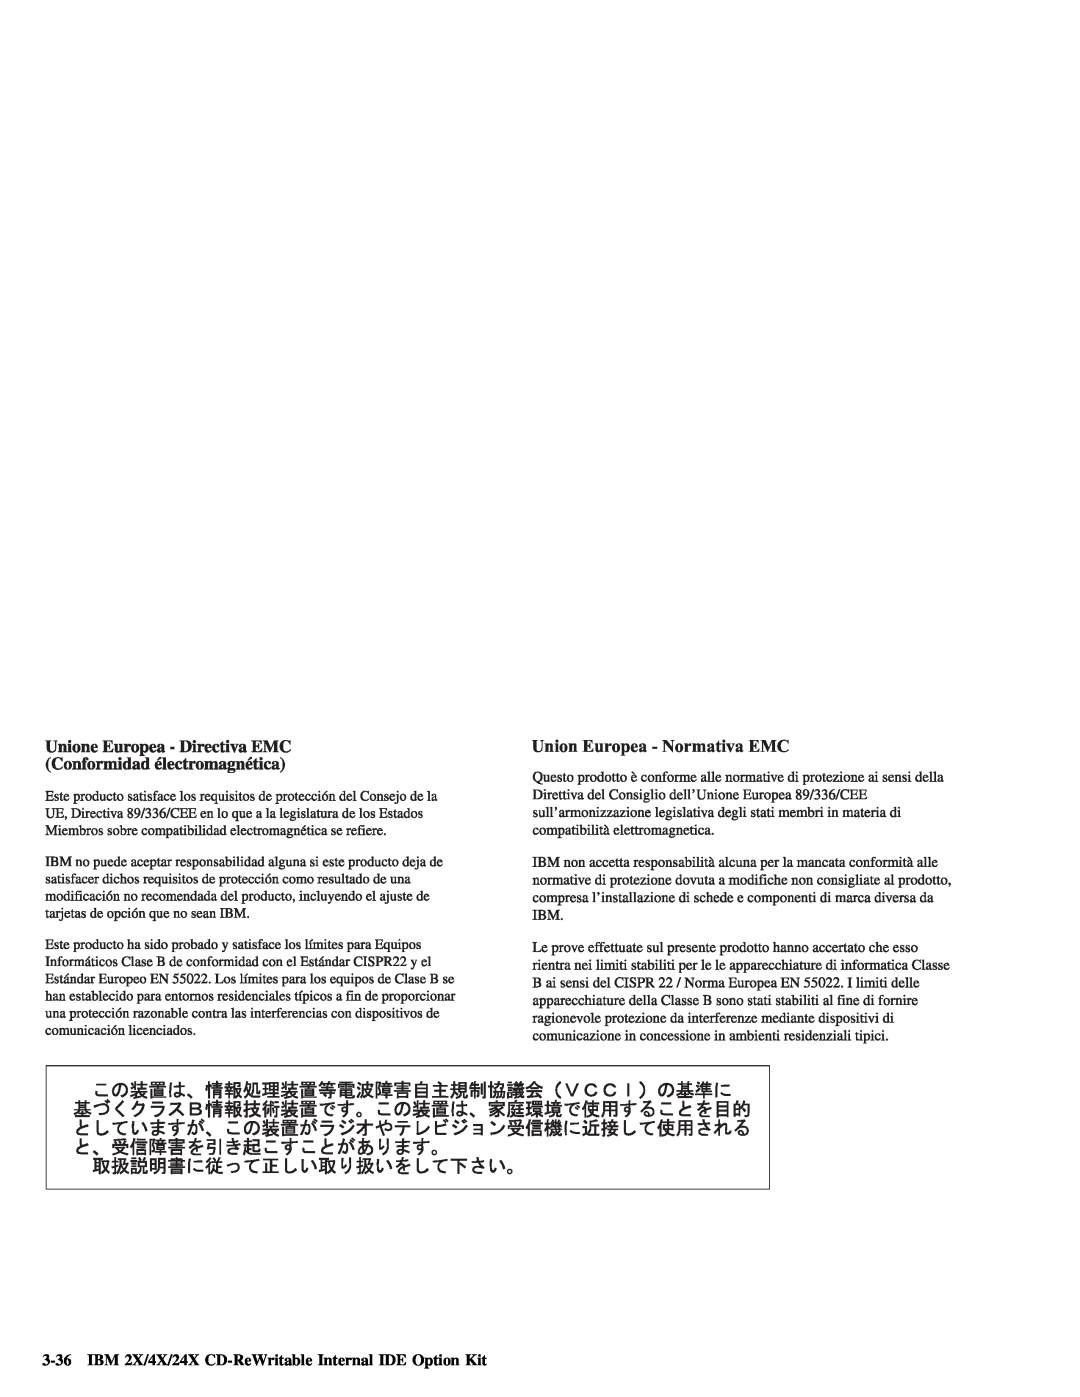 IBM 28L2234 manual Union Europea - Normativa EMC, IBM 2X/4X/24X CD-ReWritable Internal IDE Option Kit 